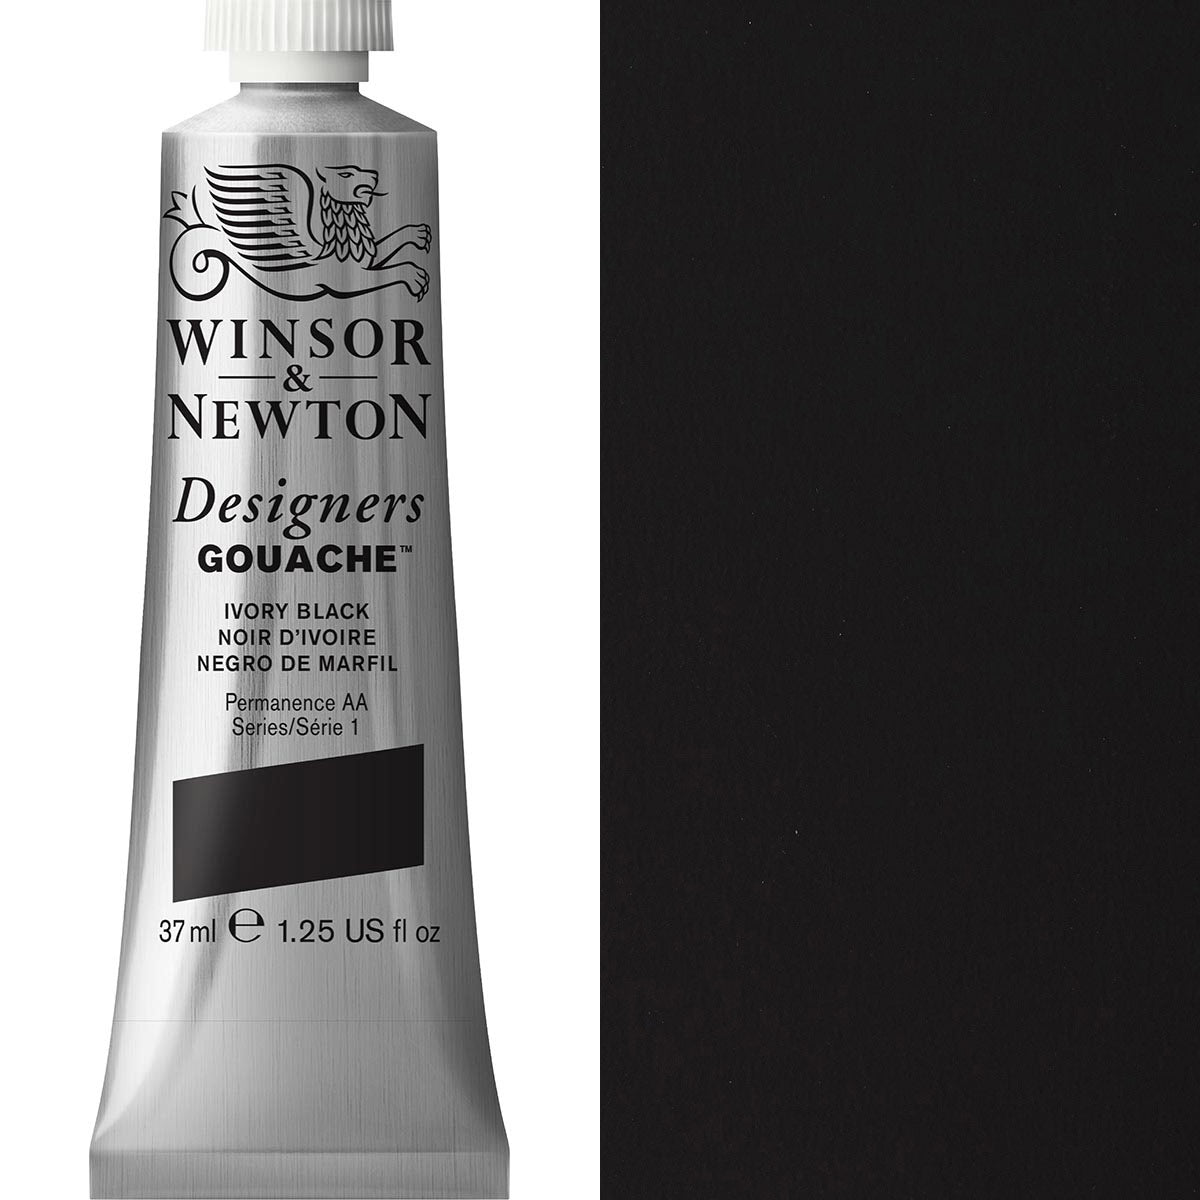 Winsor and Newton - Designers Gouache - 37ml - Ivory Black